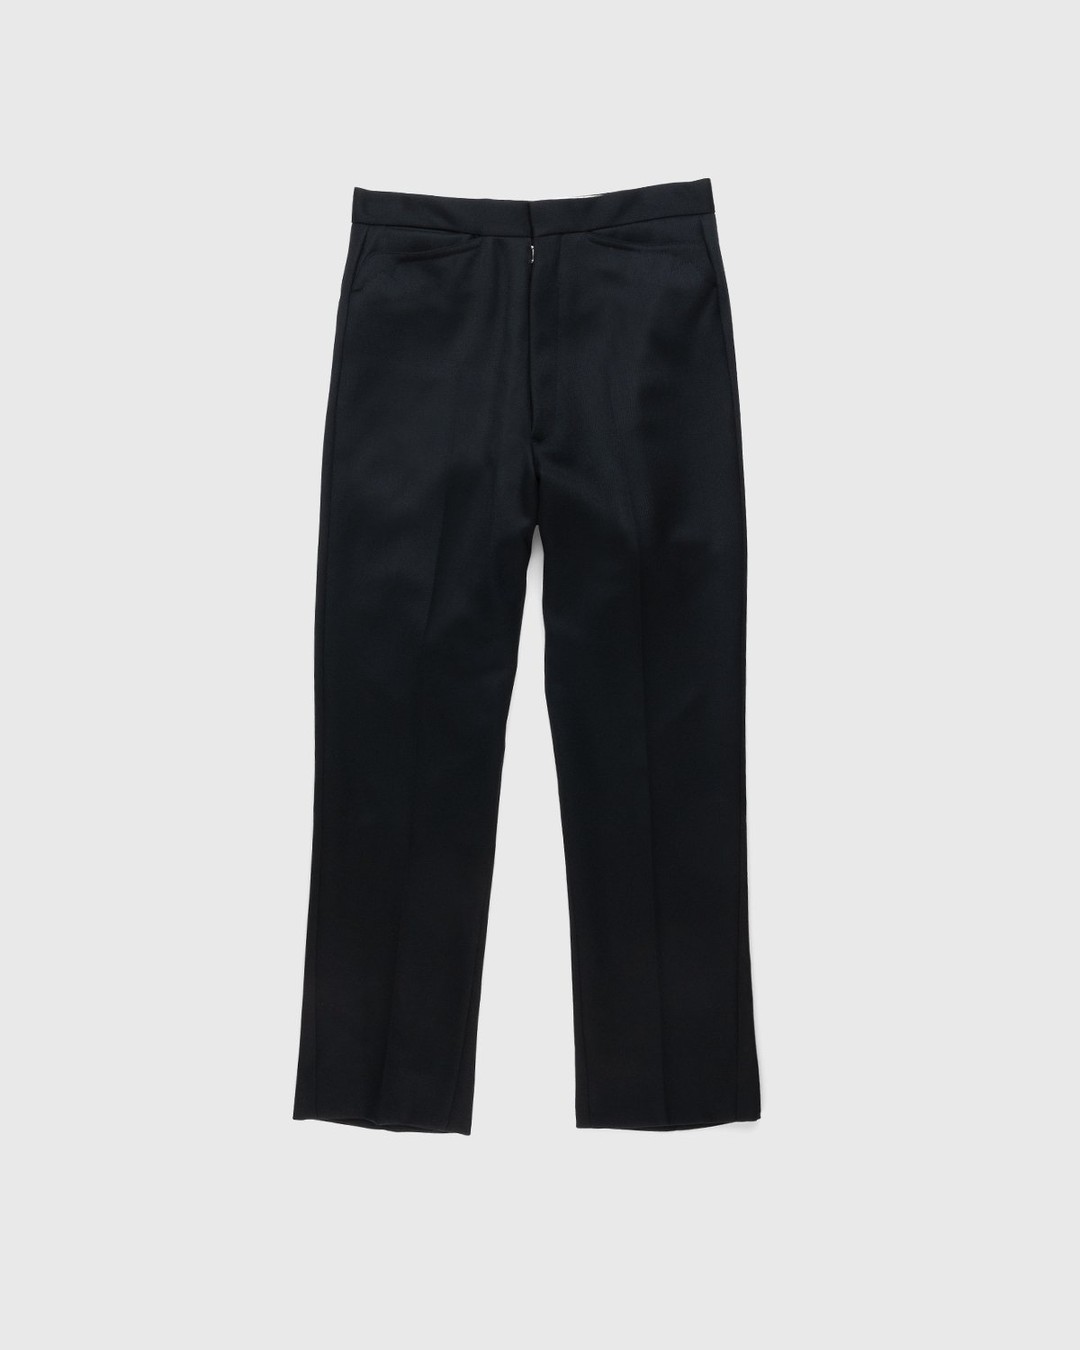 Maison Margiela – Gabardine Trousers Black - Trousers - Black - Image 1